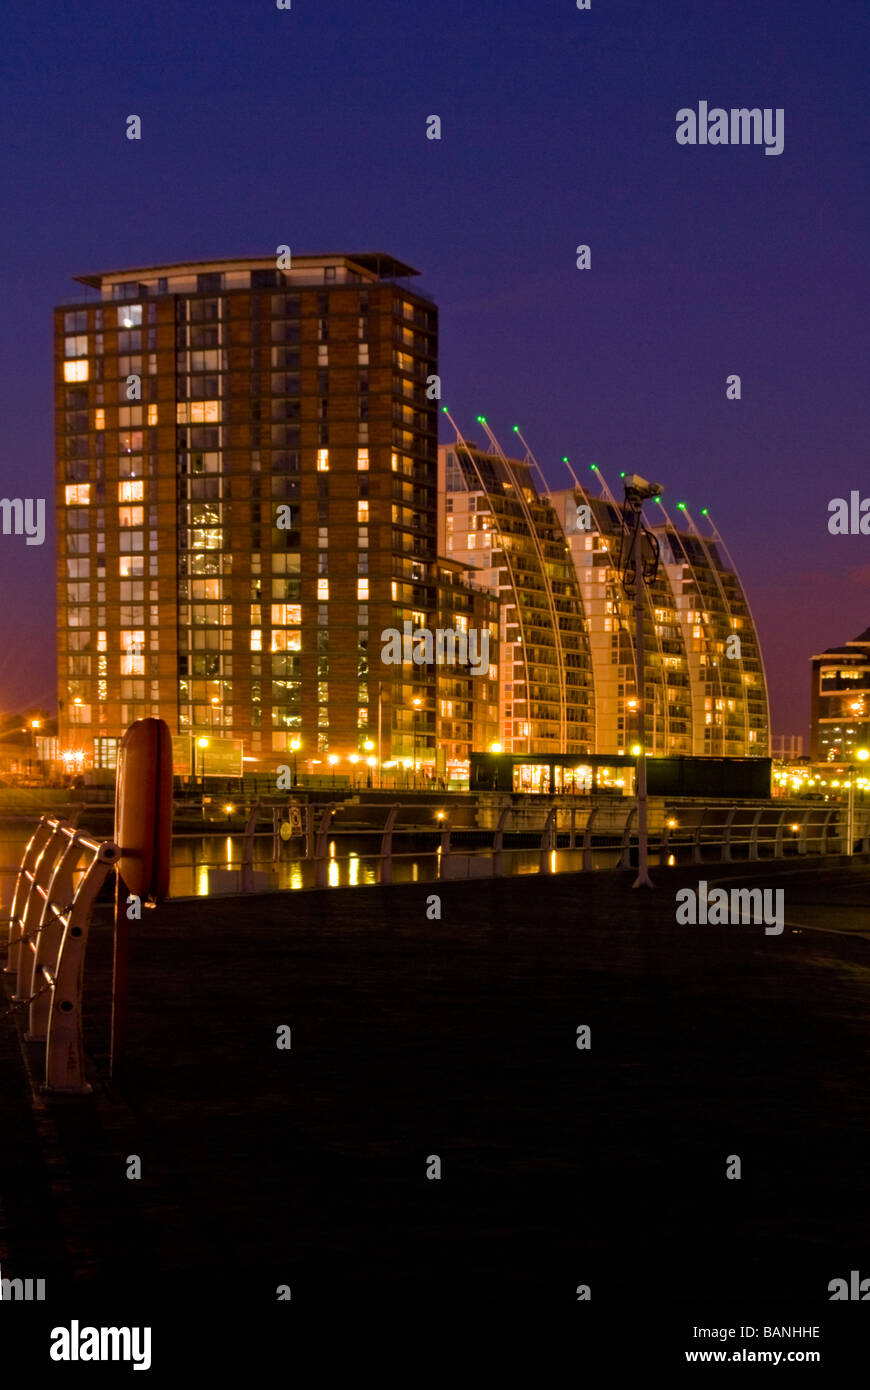 Appartements et bâtiments NV la nuit, Salford Quays, Manchester, Angleterre, RU Banque D'Images